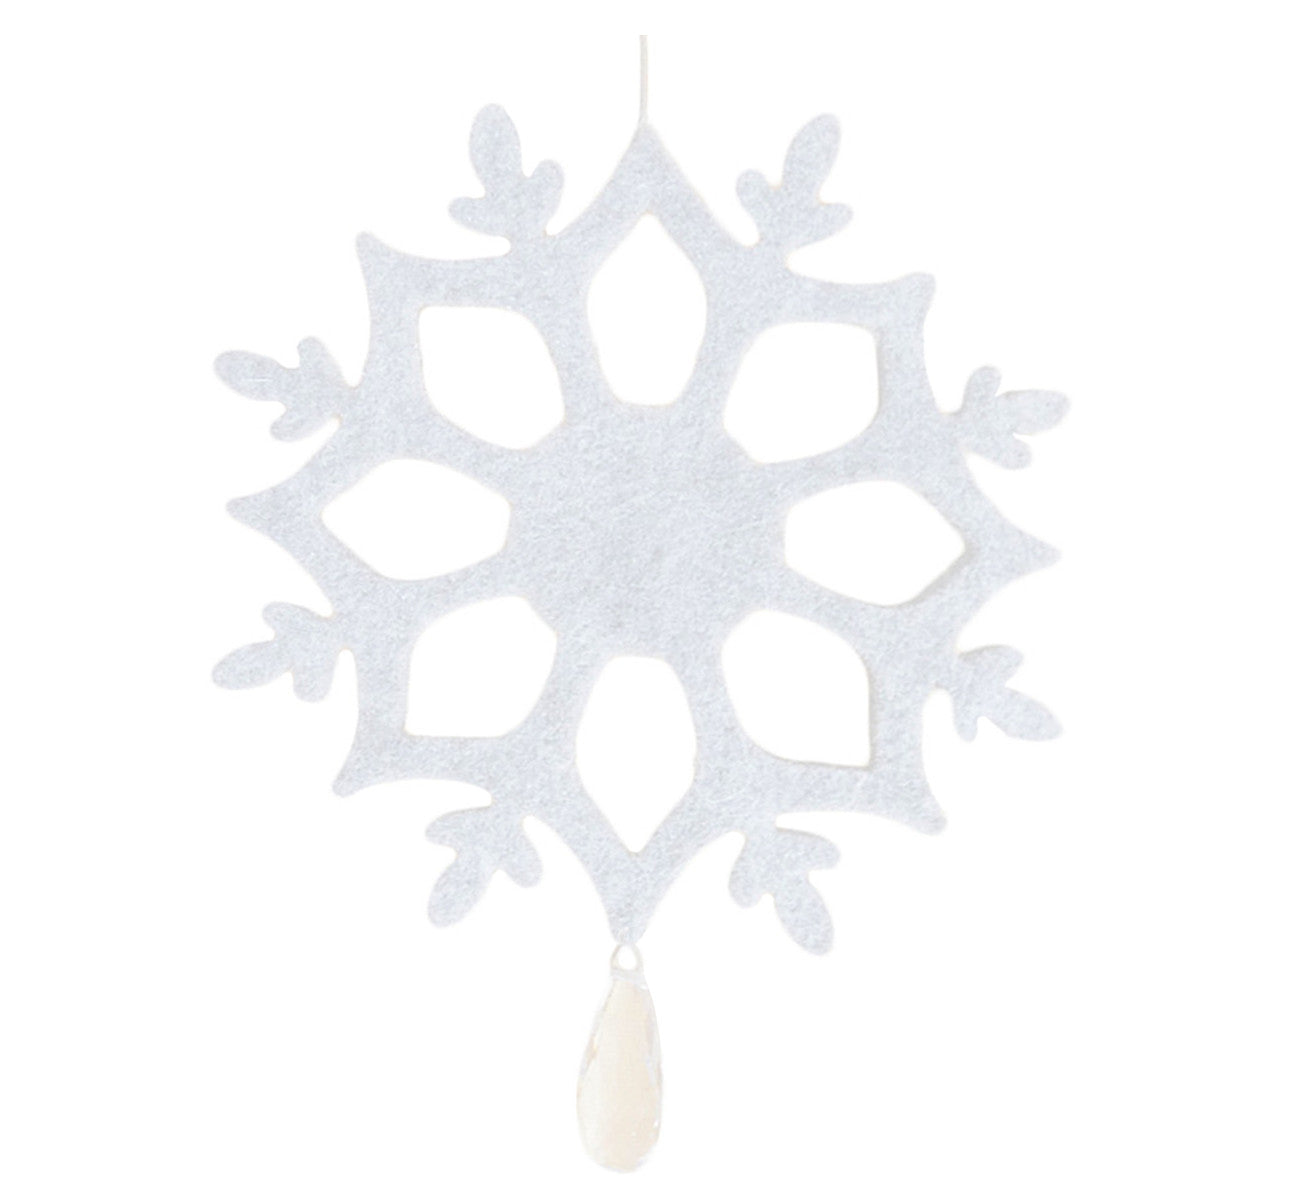 White flax felt decoration snowflake, 15x12.5 cm, 5.90x4.72", with crystal stone, handmade.